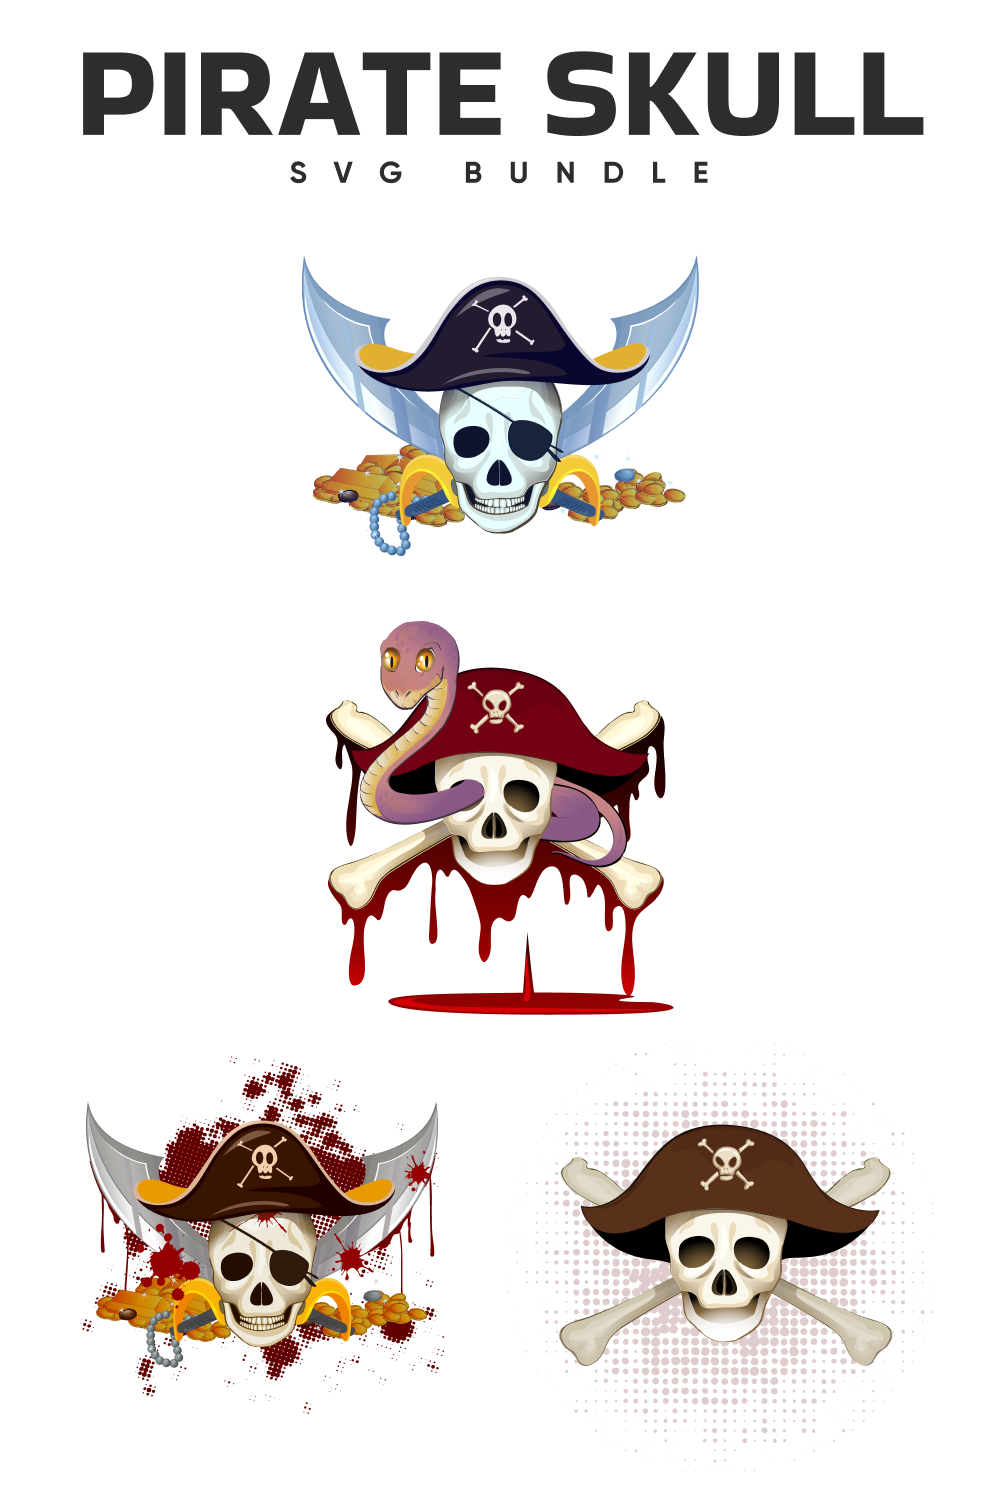 Pirate skull svg bundle of pinterest.